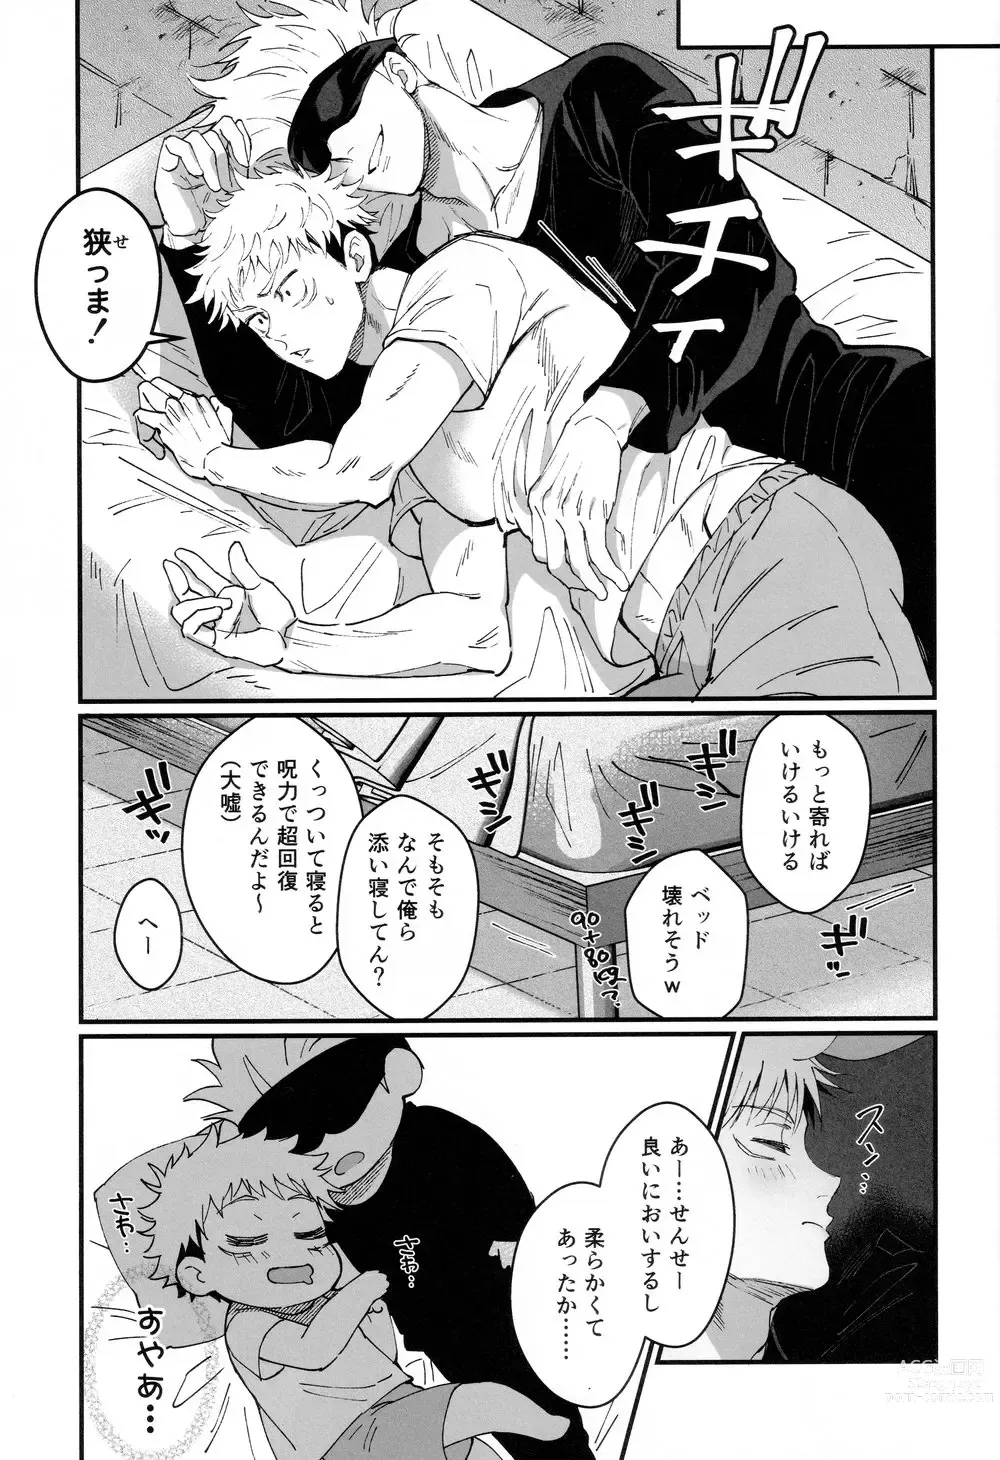 Page 11 of doujinshi Gachikoi Monster